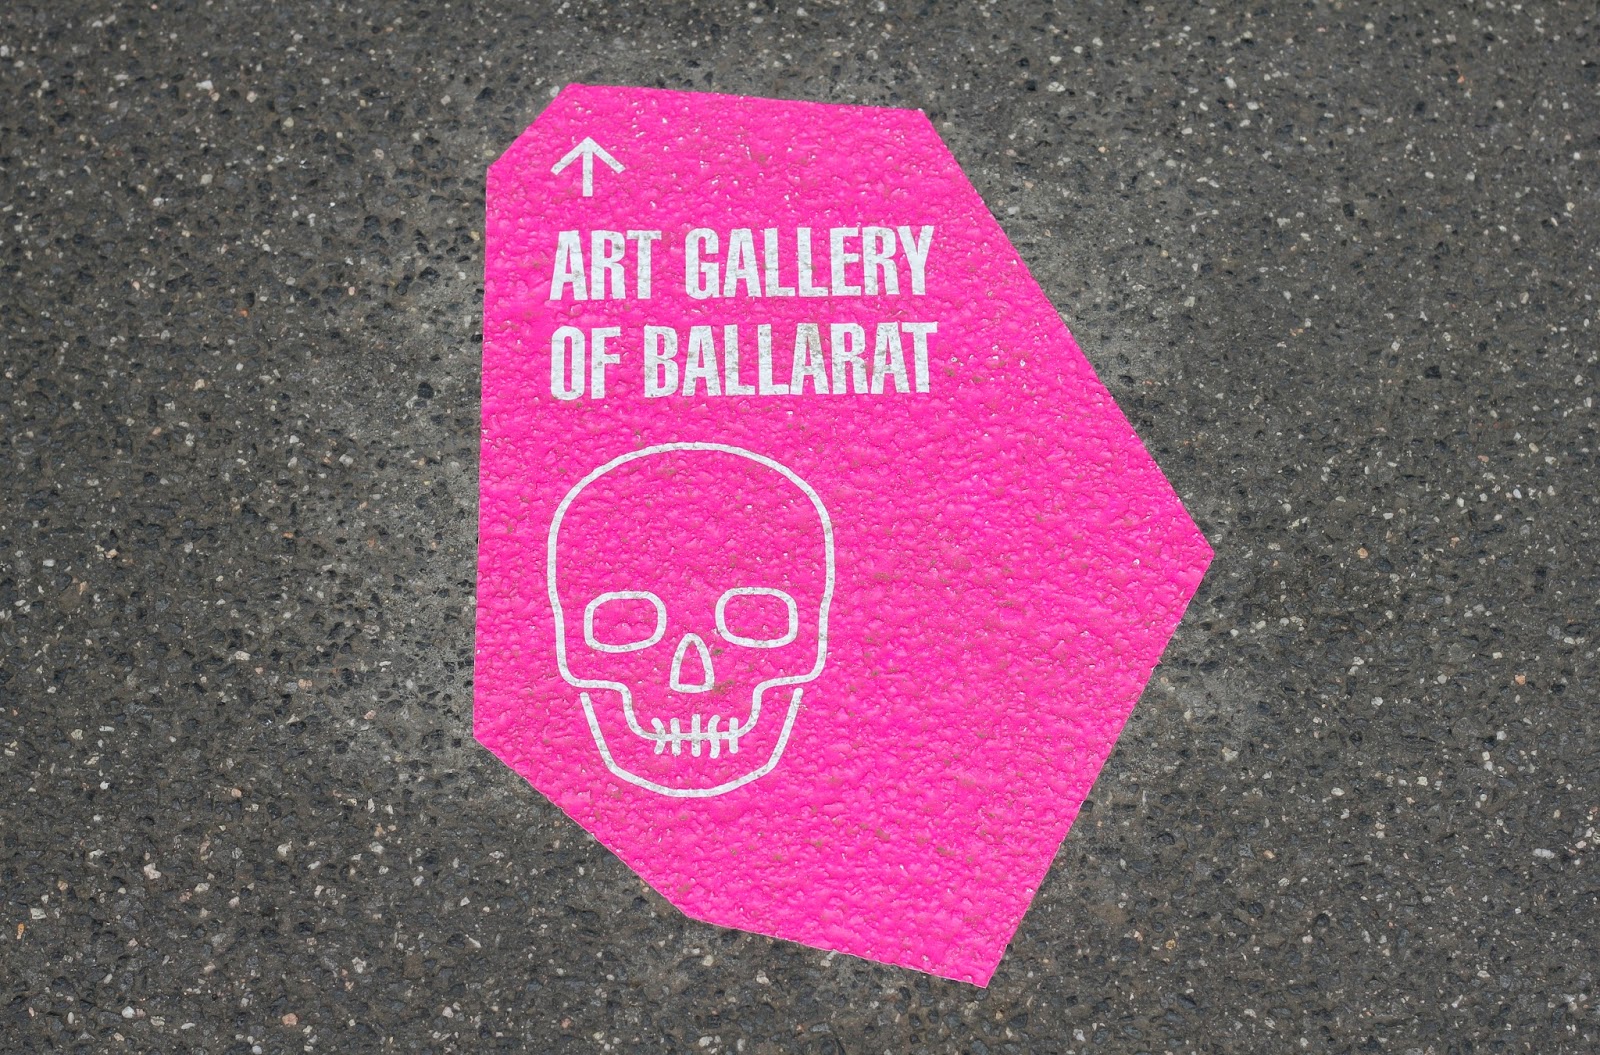 Visit the Goldfields Girl blog for more Ballarat events